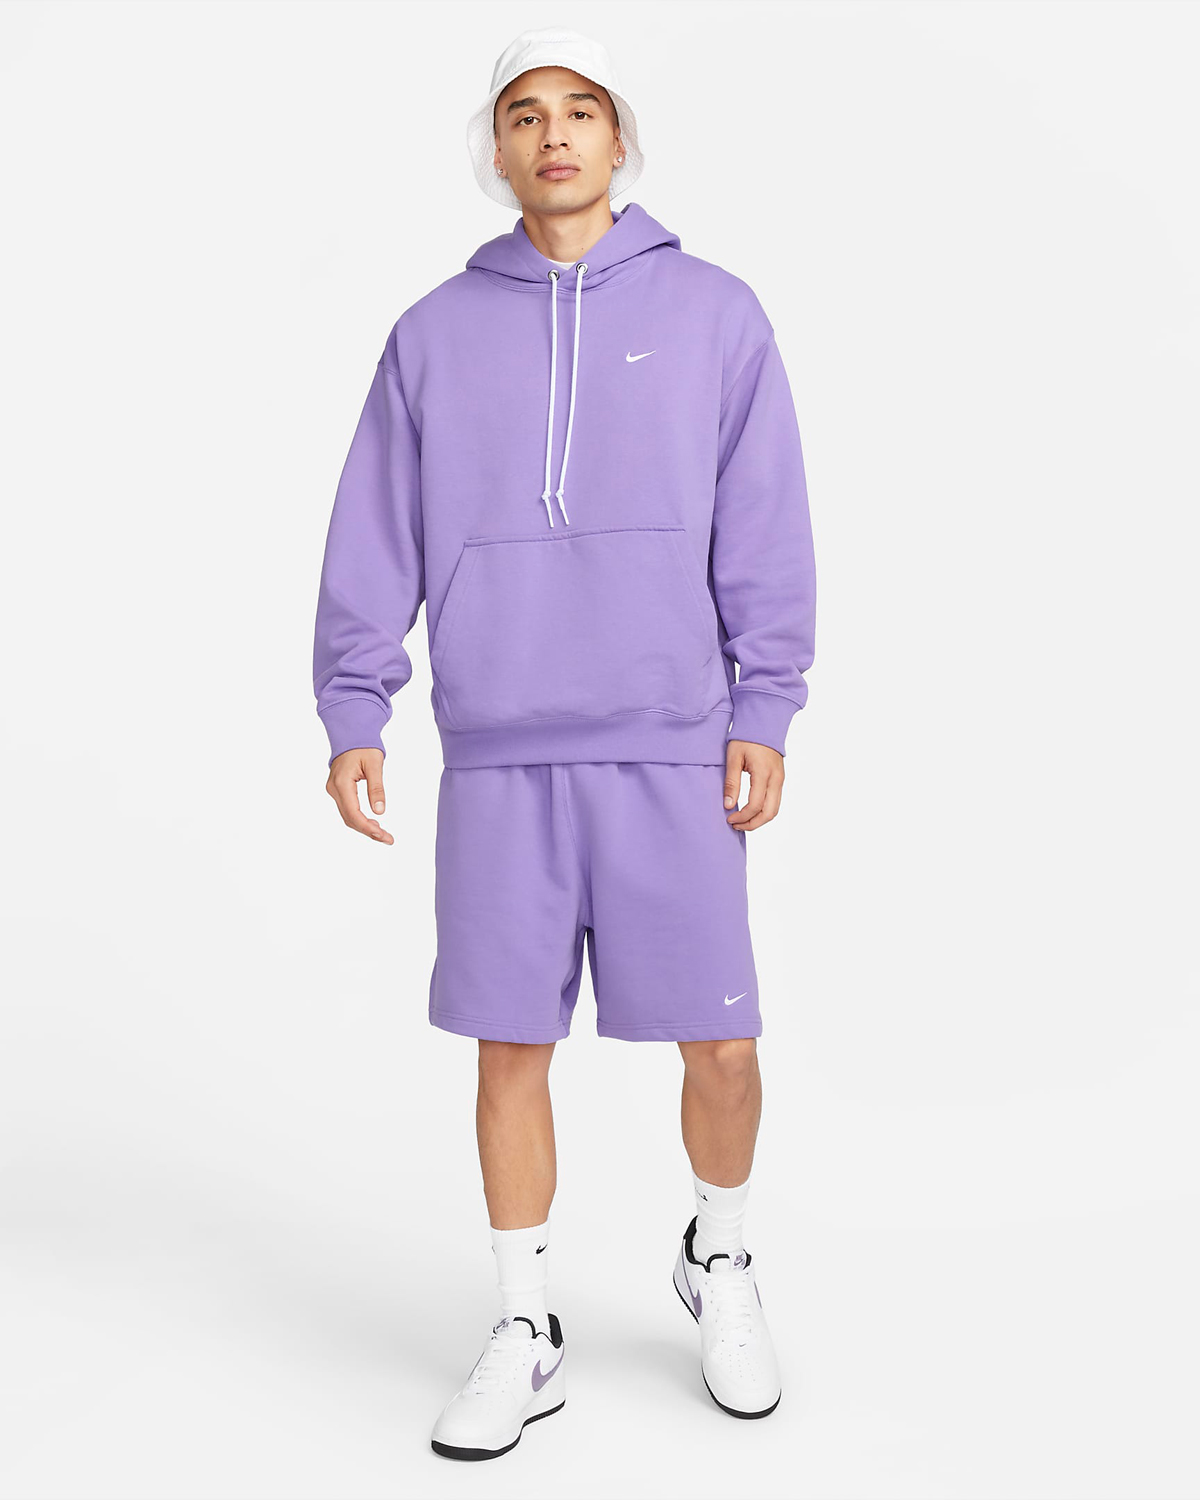 Nike-Space-Purple-Clothing